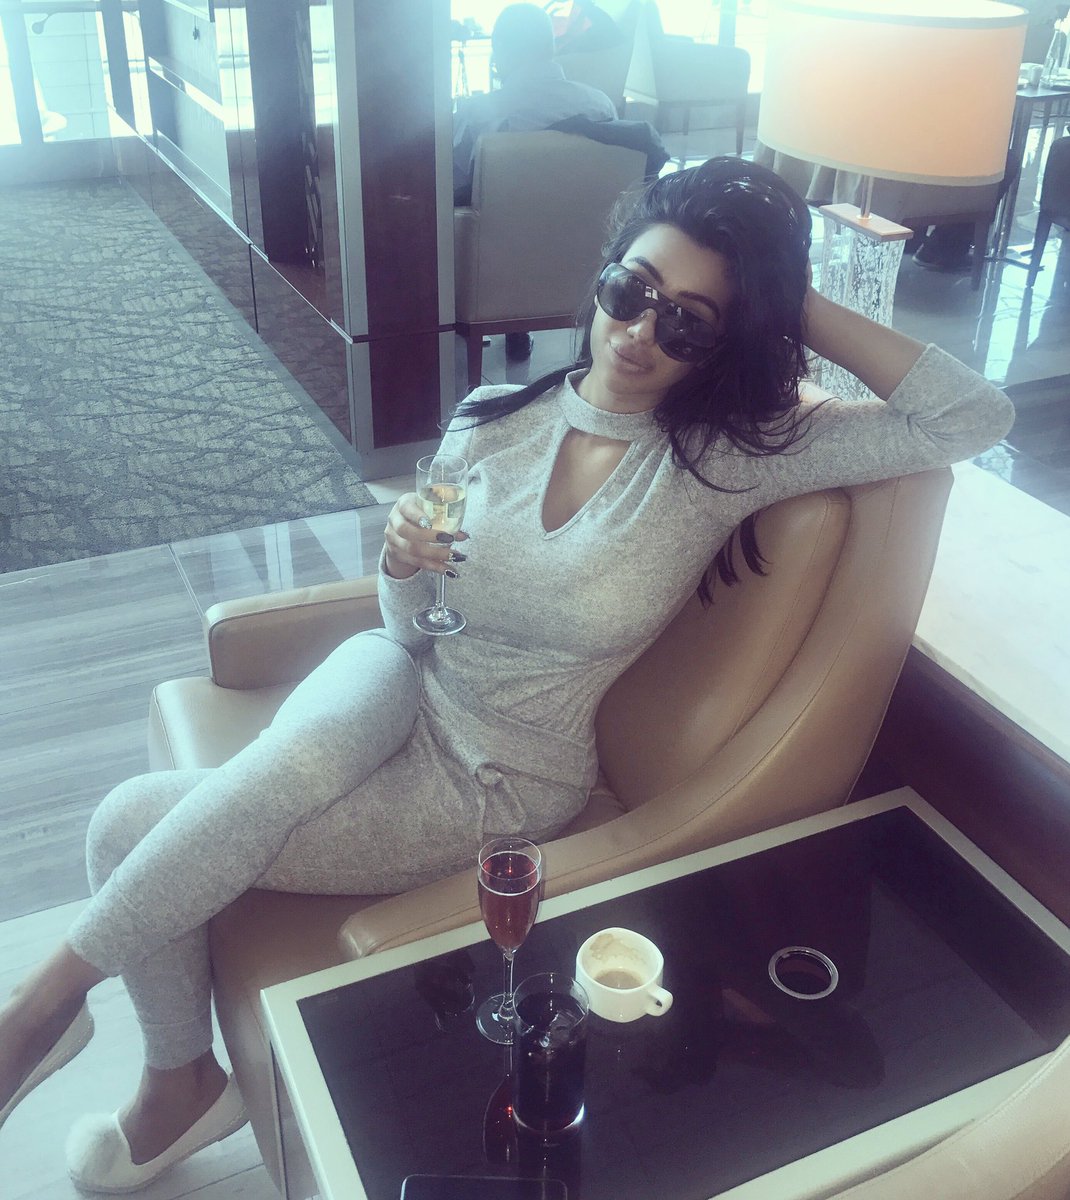 Champagne breakfast in Dubai lounge this morning before my flight ✈️???? https://t.co/EUZUNgzT43